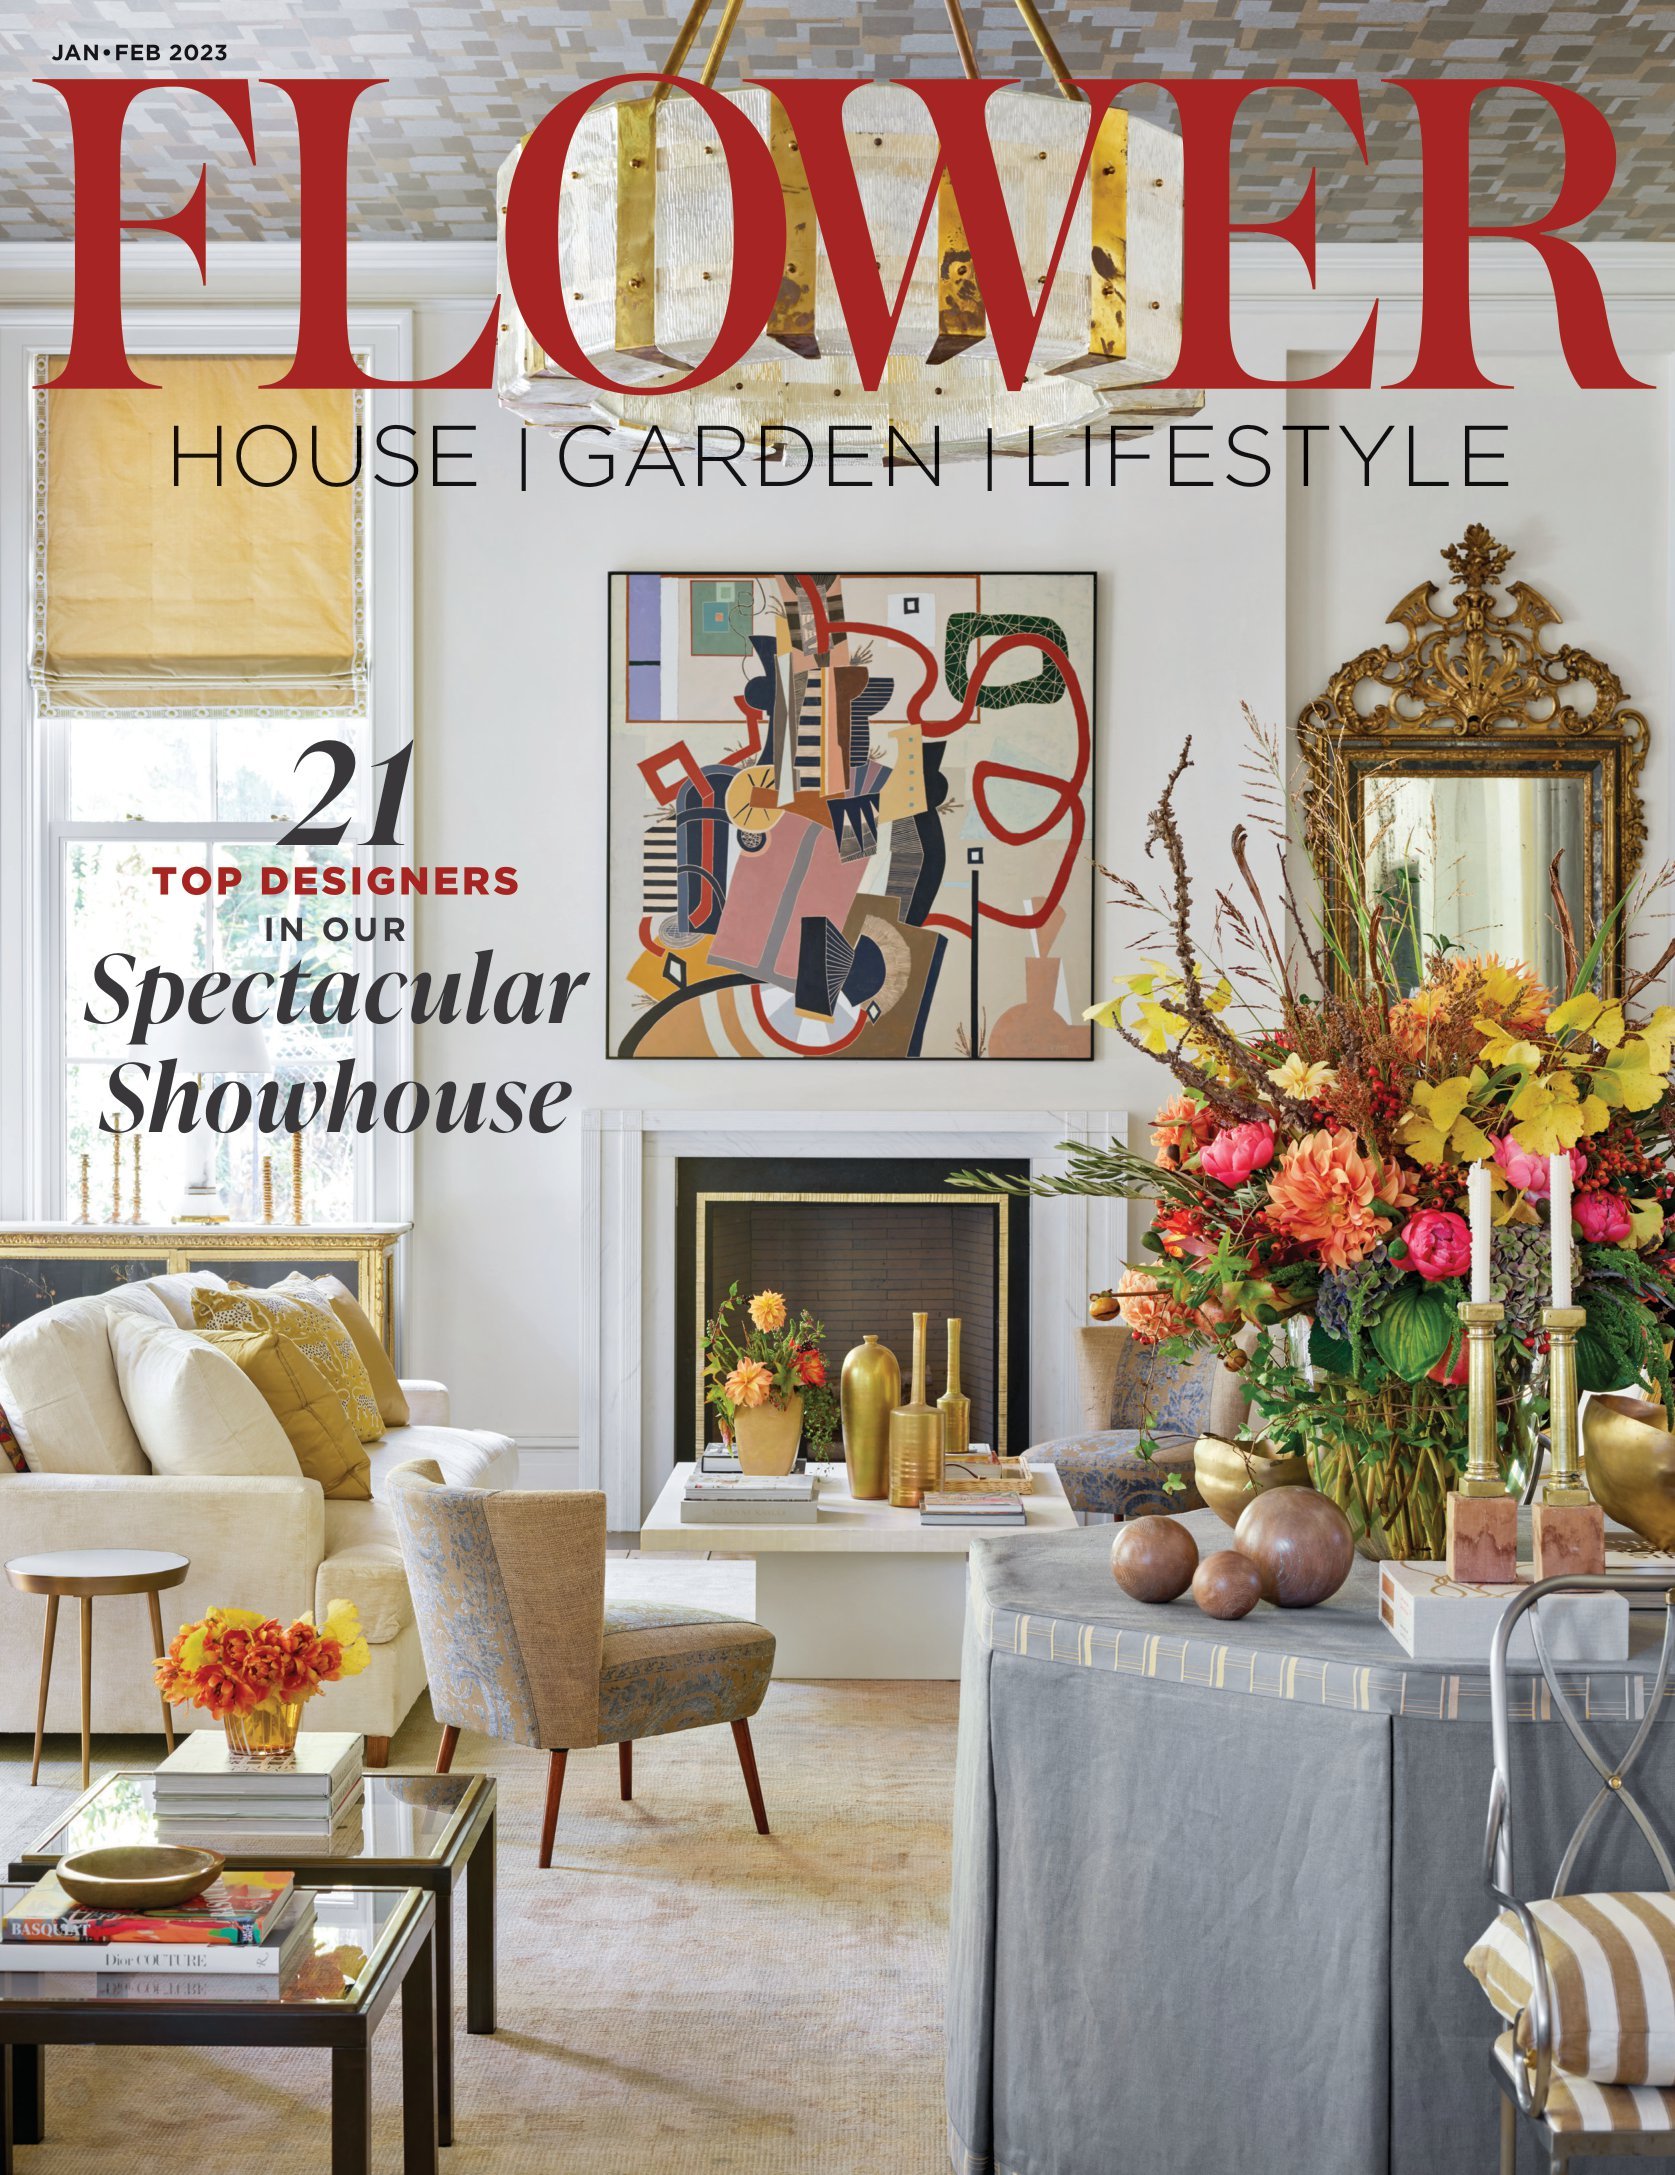  Flower Magazine, January-February 2023 